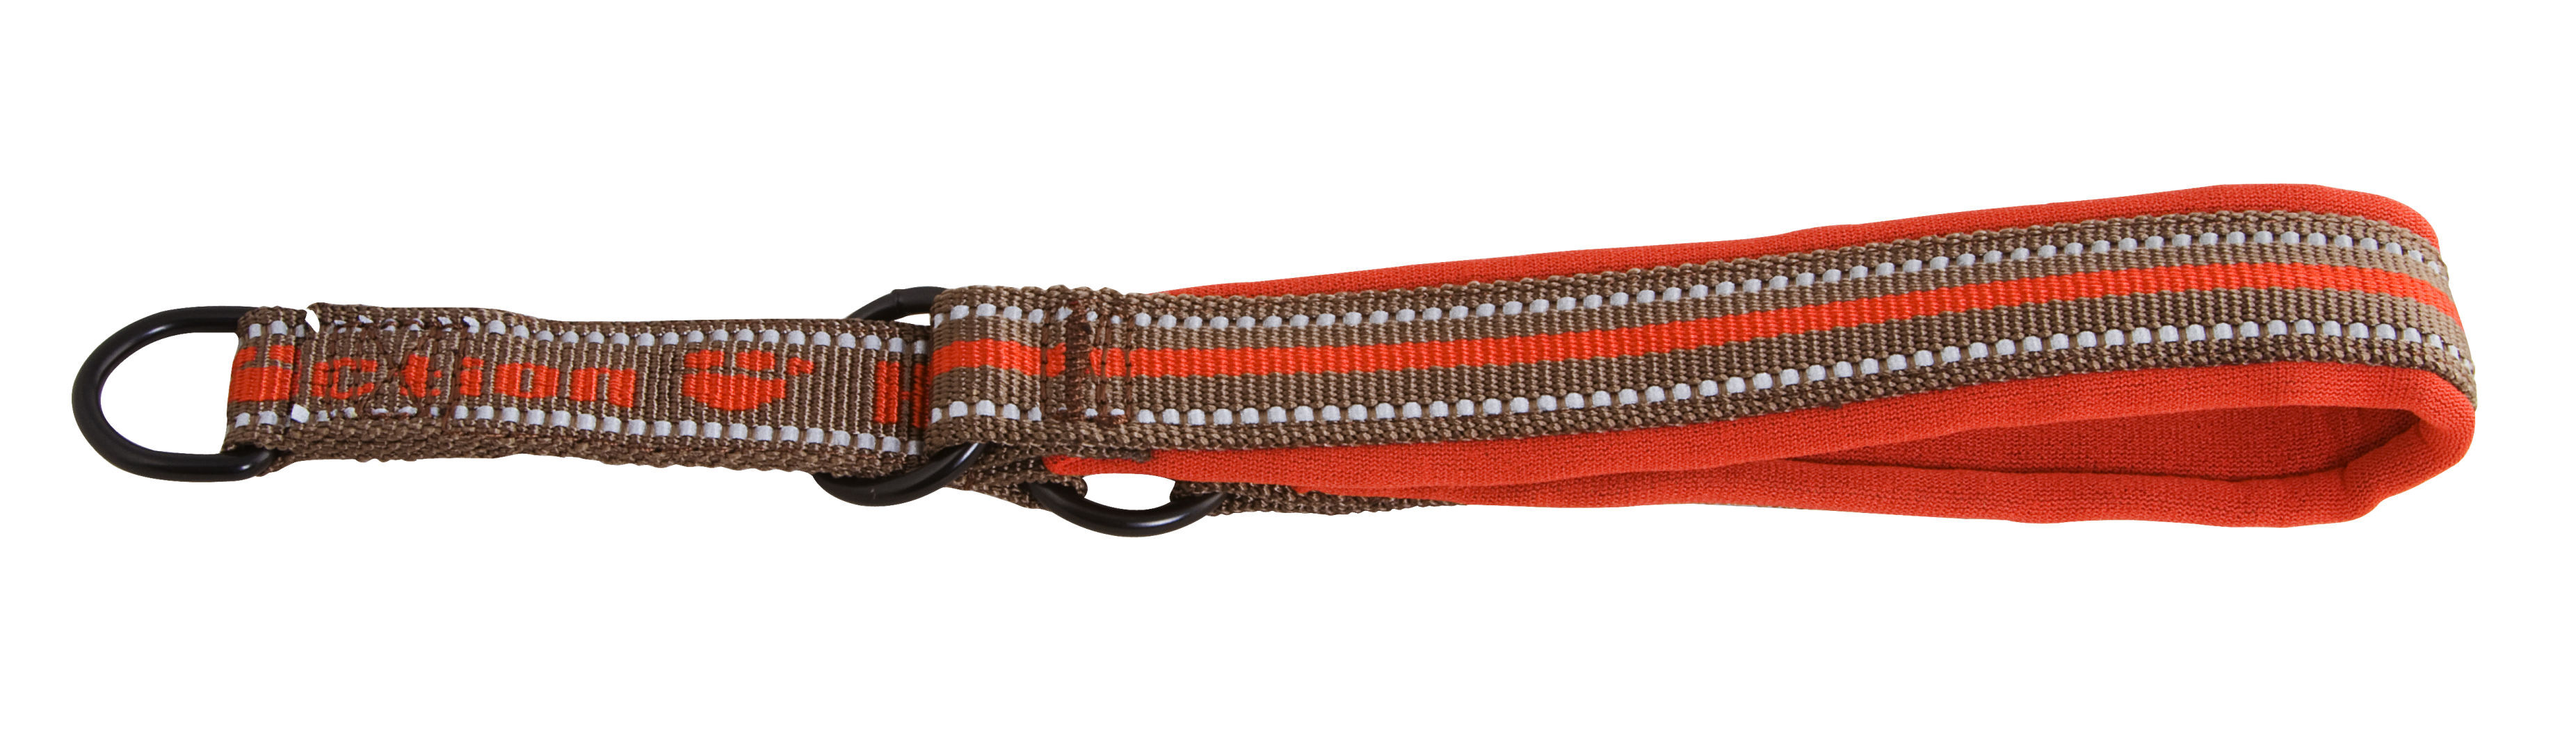 Hurtta-Halsband-Zugstop-Padded-half-choke-collar-reflektierendes-Halsband-mit-Zugstop-rot-HU-931925